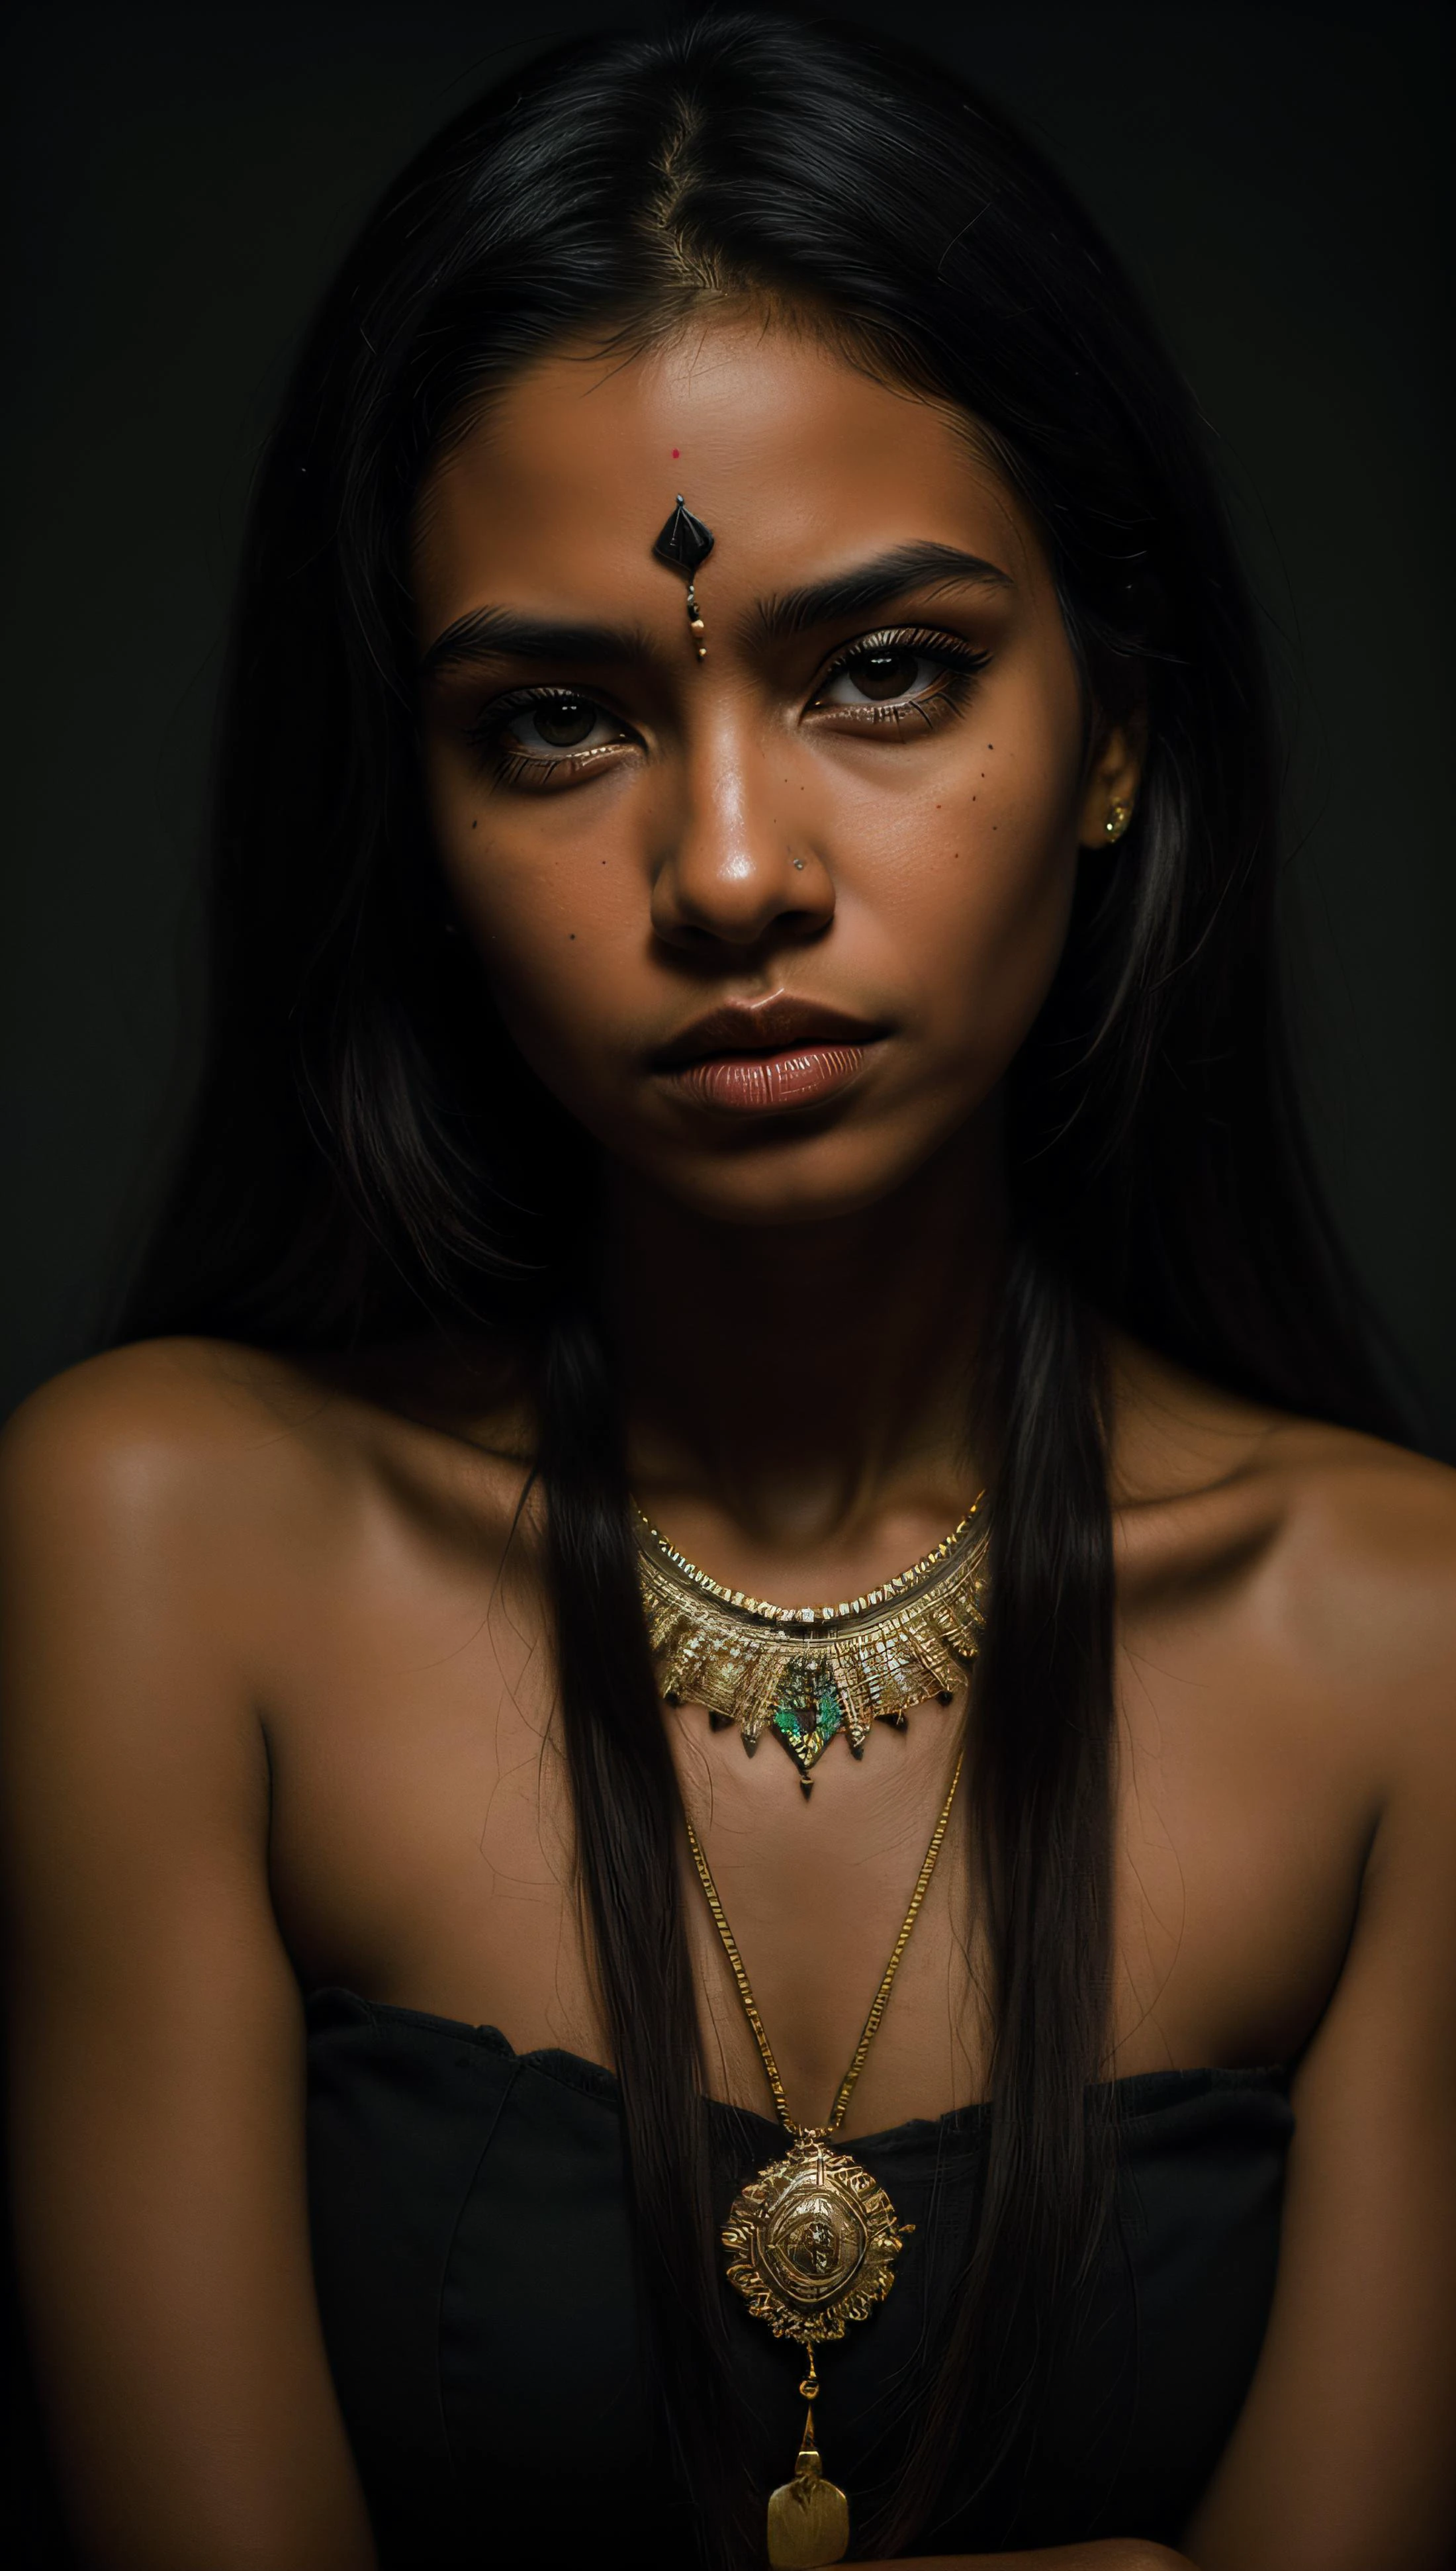 mujer tribal de piel de caramelo, sombra profunda, Tema oscuro, retrato de 40 mm, collar tribal, adornos tribales, abandonado, foto profesional, 28mm, cosa análoga, (National Geographic)